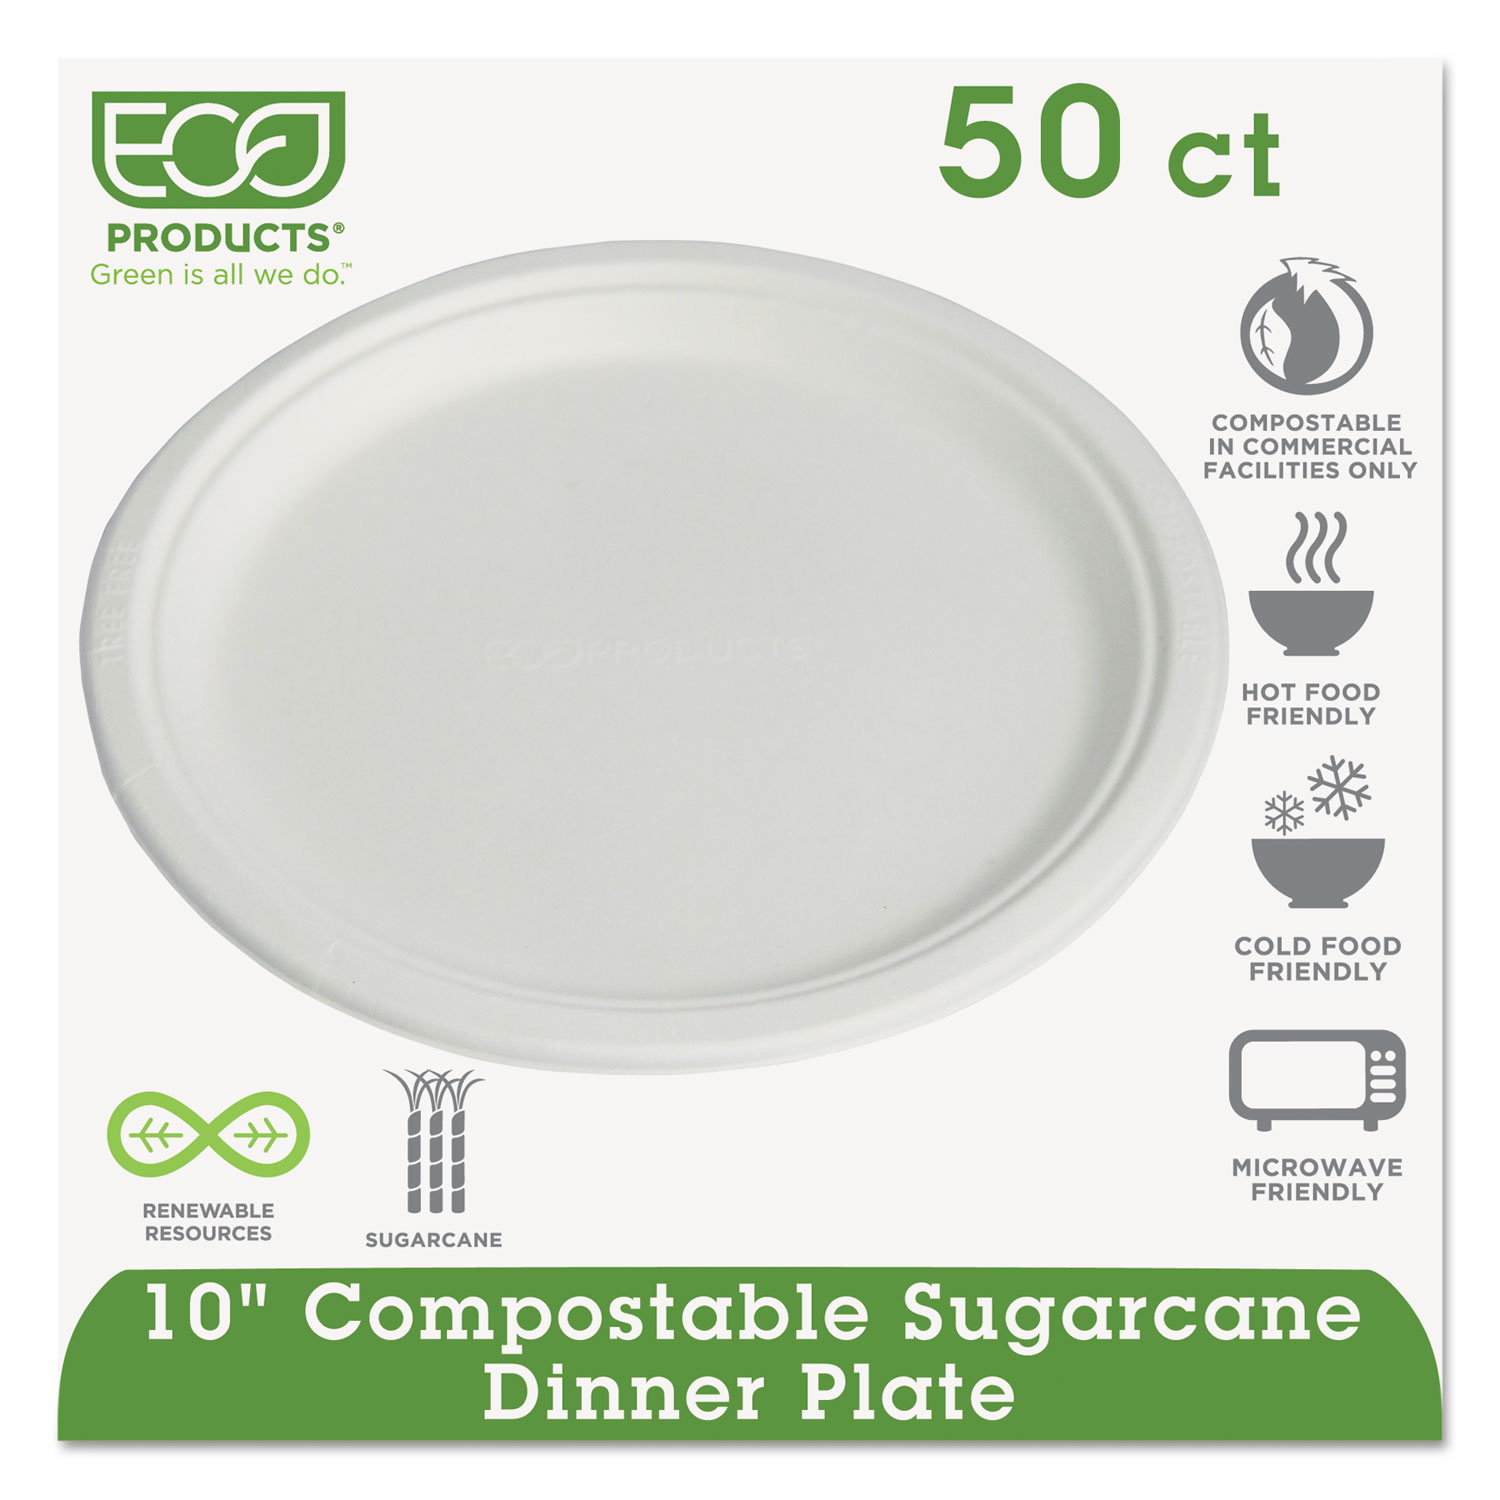  Eco-Products EP-P005PK Compostable Sugarcane Dinnerware, 10 Plate, Natural White, 50/Pack, 10 Pk/Ctn (ECOEPP005PKCT) 